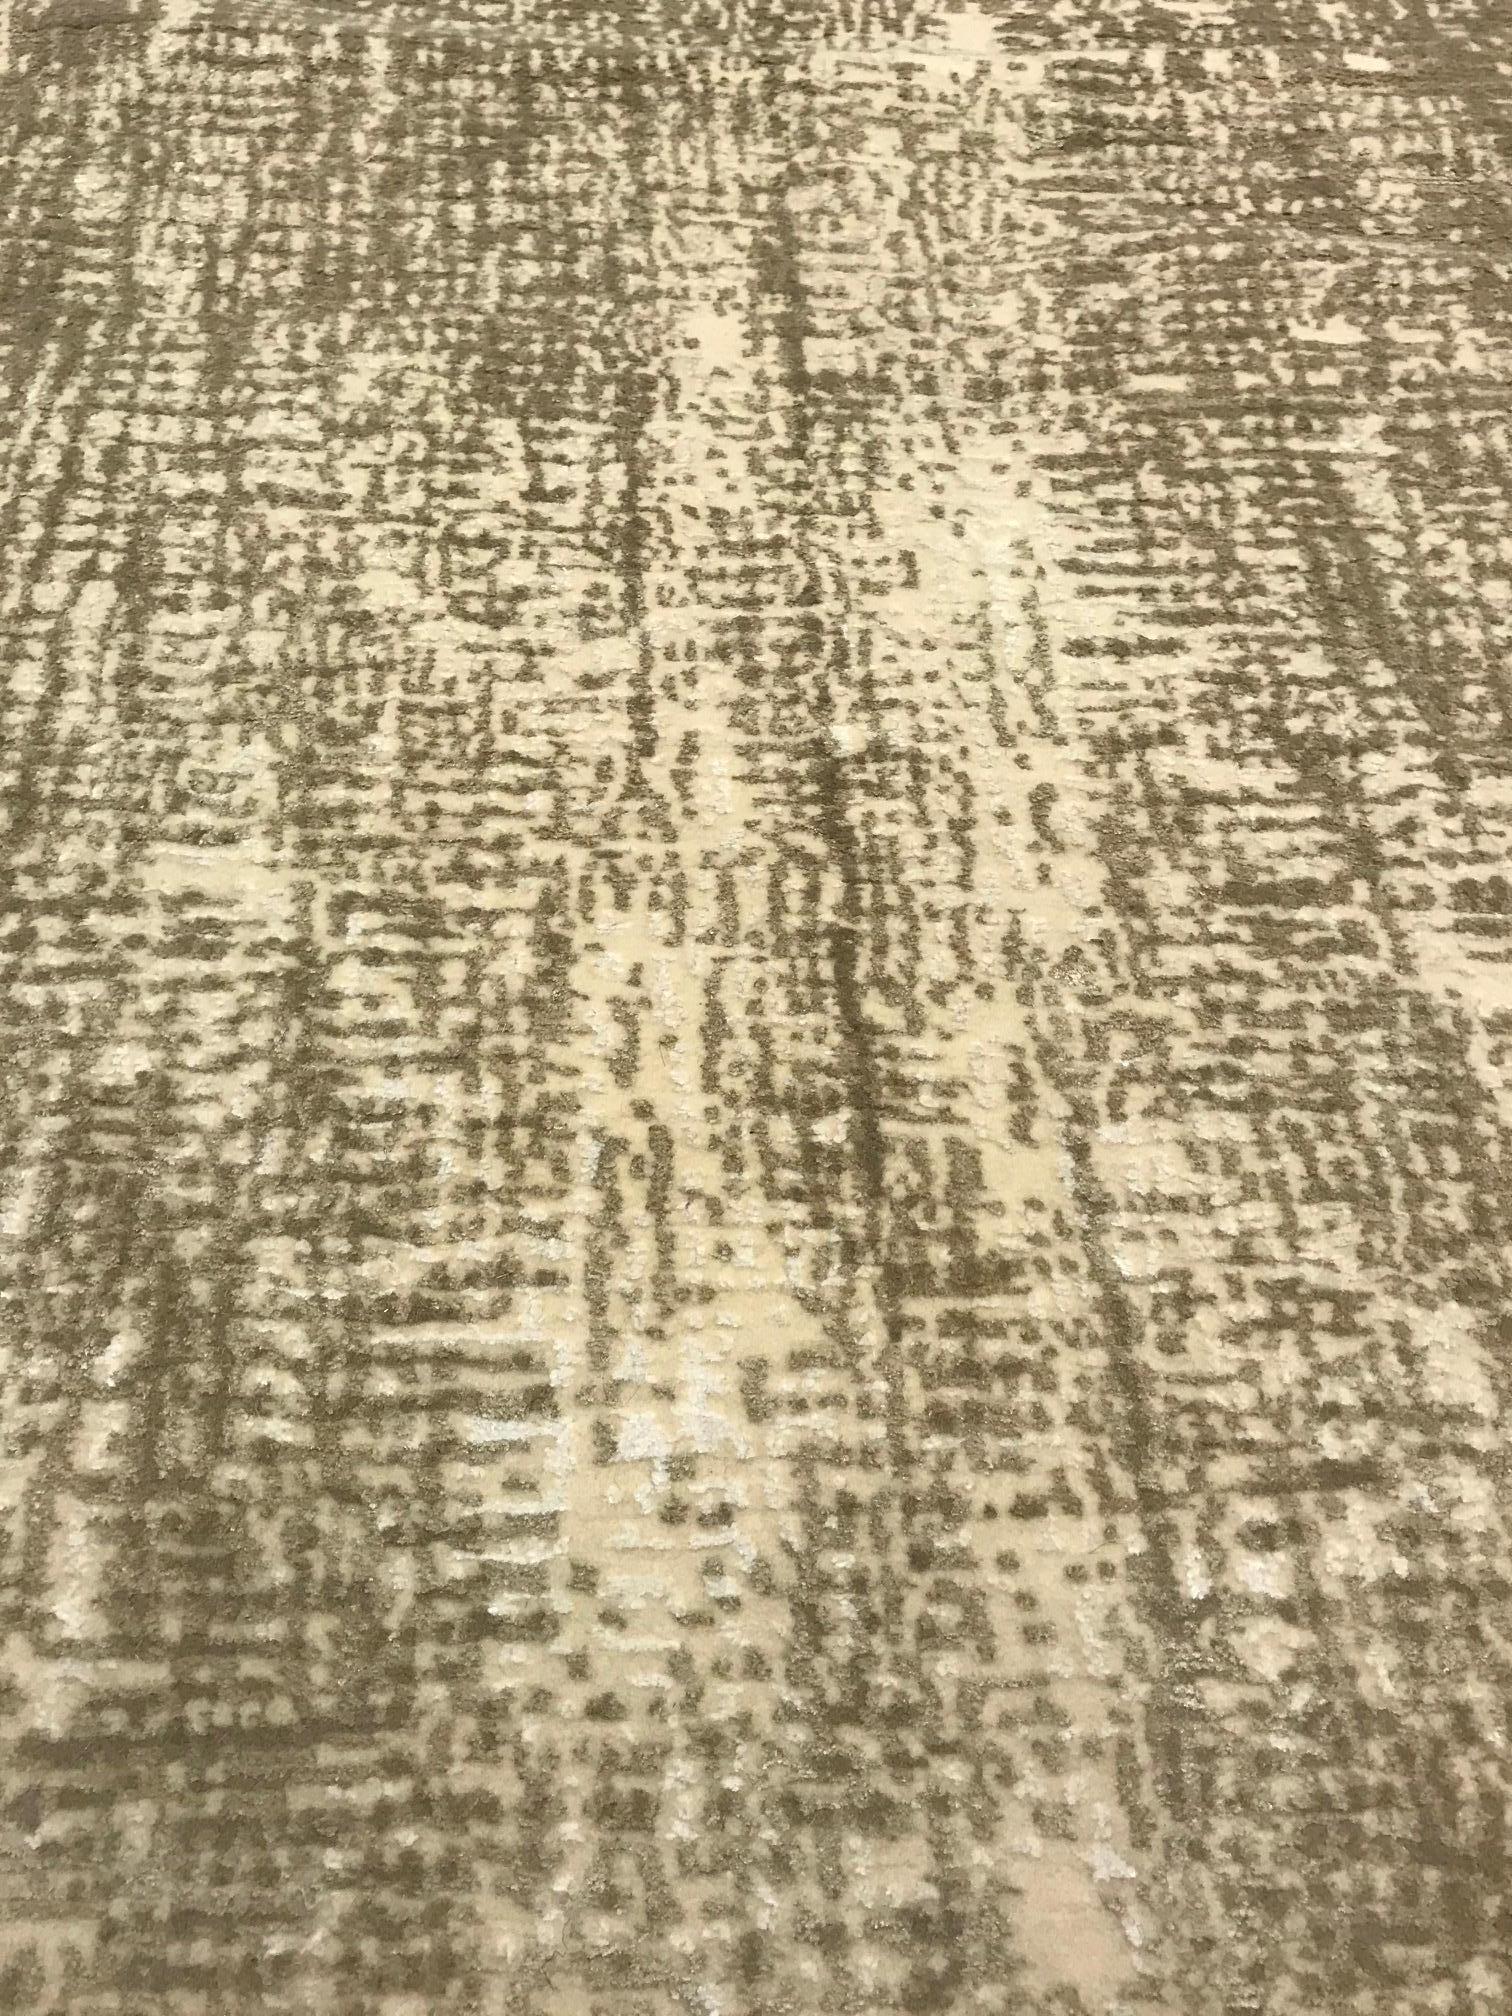 Contemporary gold, beige, handmade wool and silk rug by Doris Leslie Blau
Size: 13'0